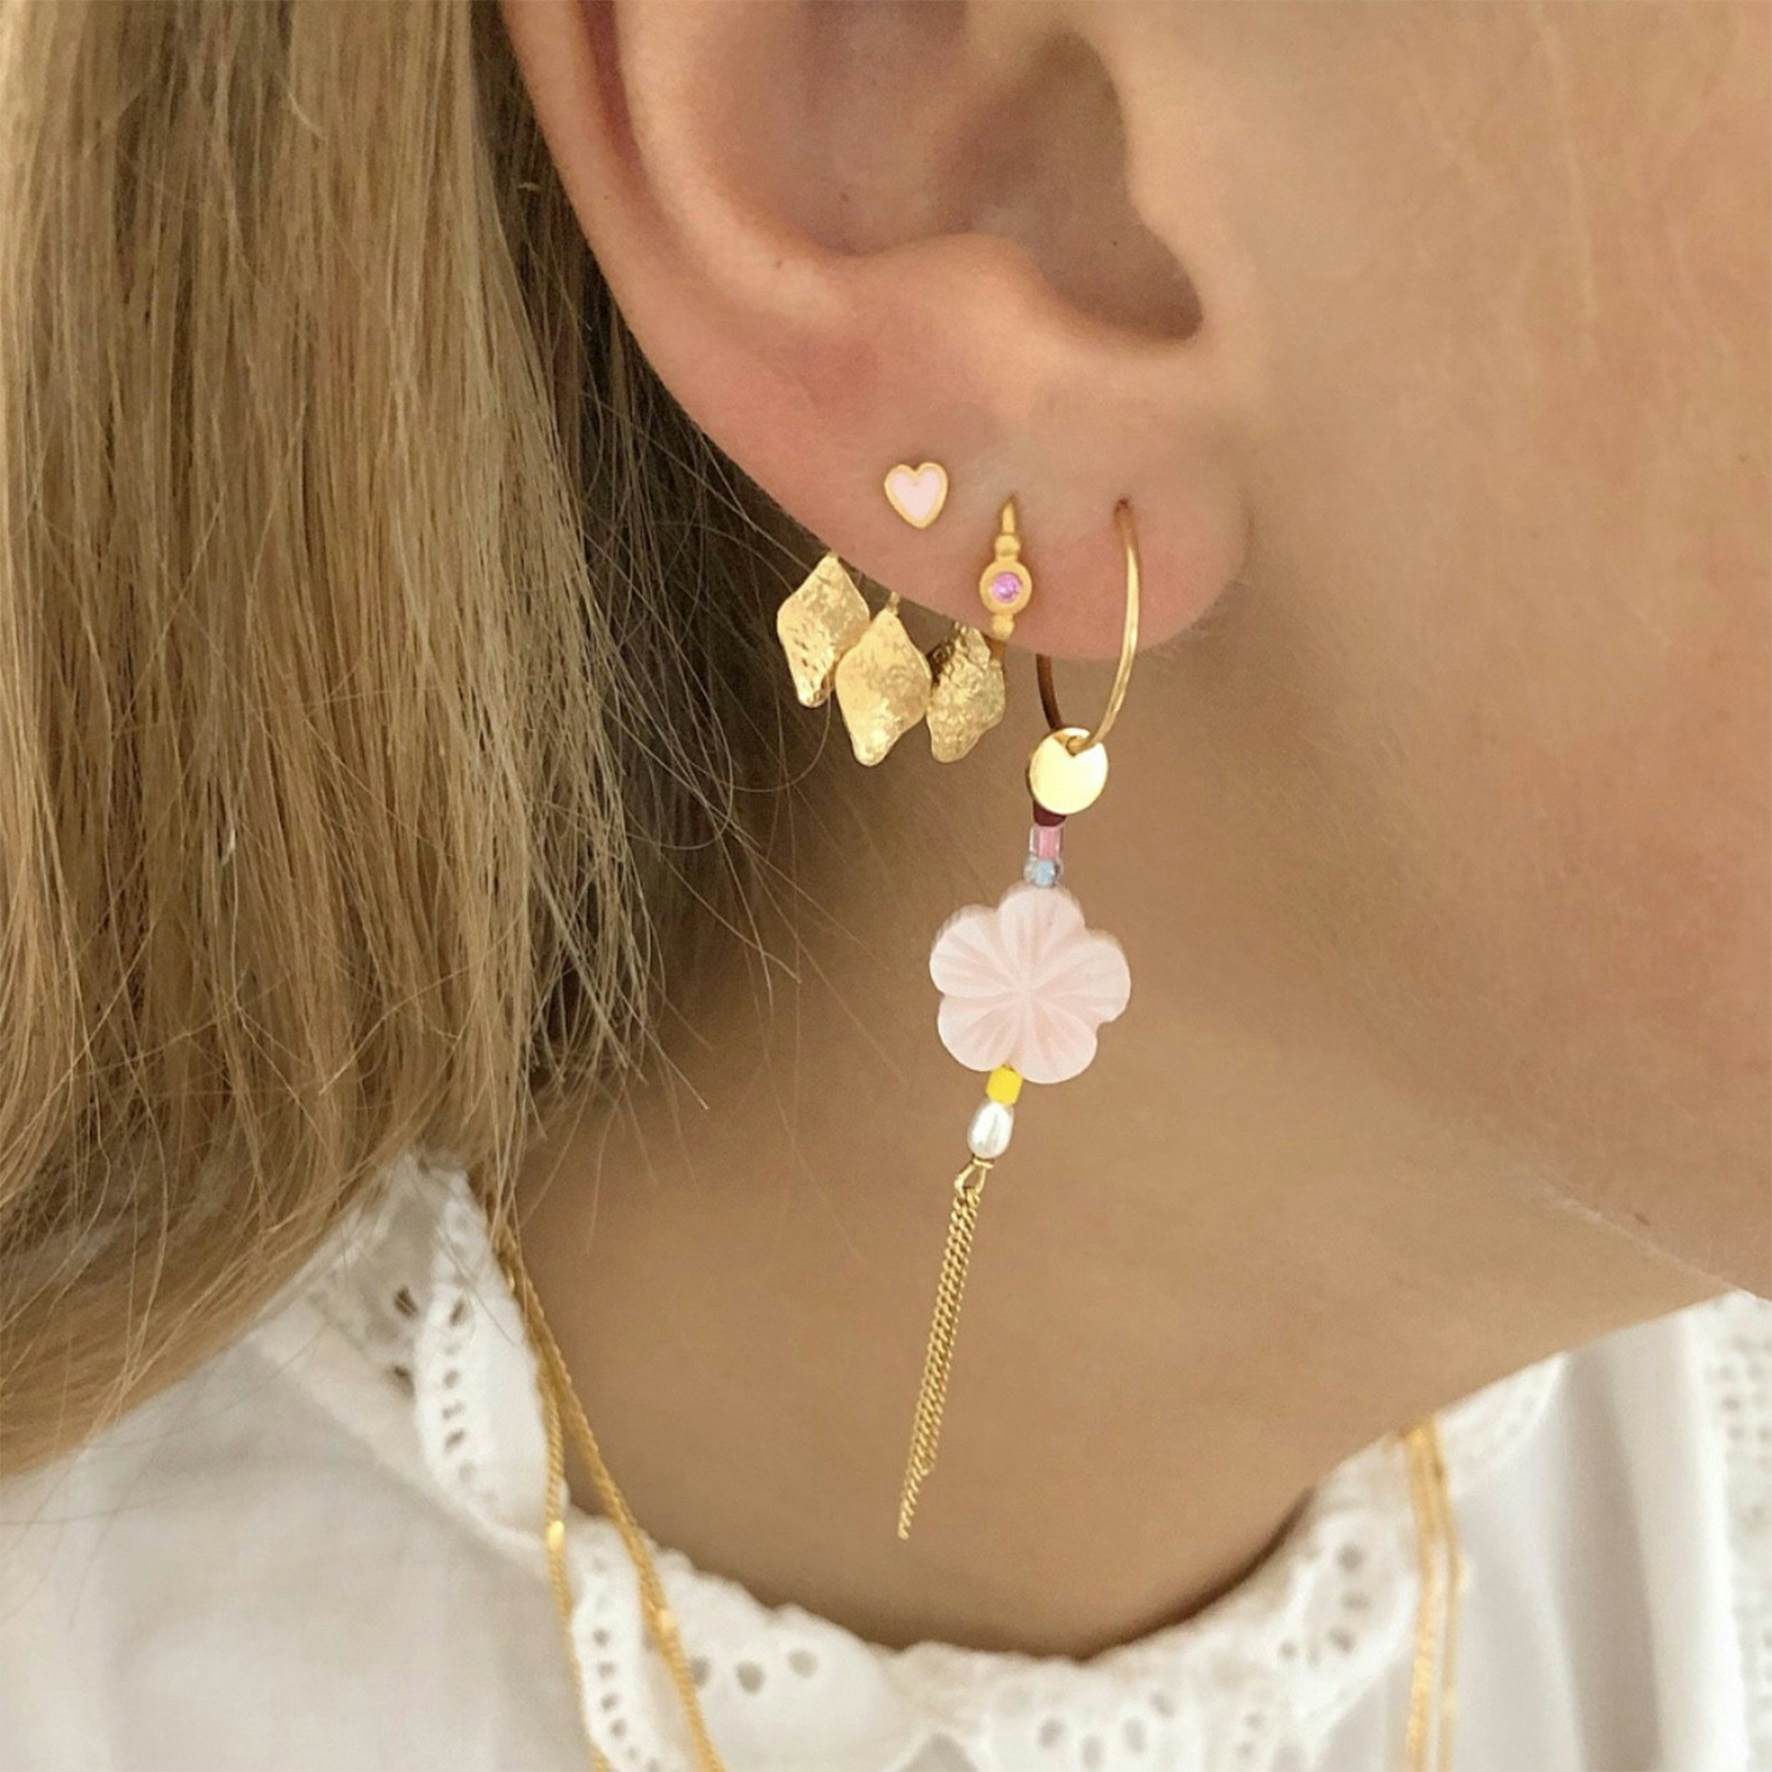 Petit Bon-Bon Pink Zircon Earring Piece fra STINE A Jewelry i Forgylt-Sølv Sterling 925